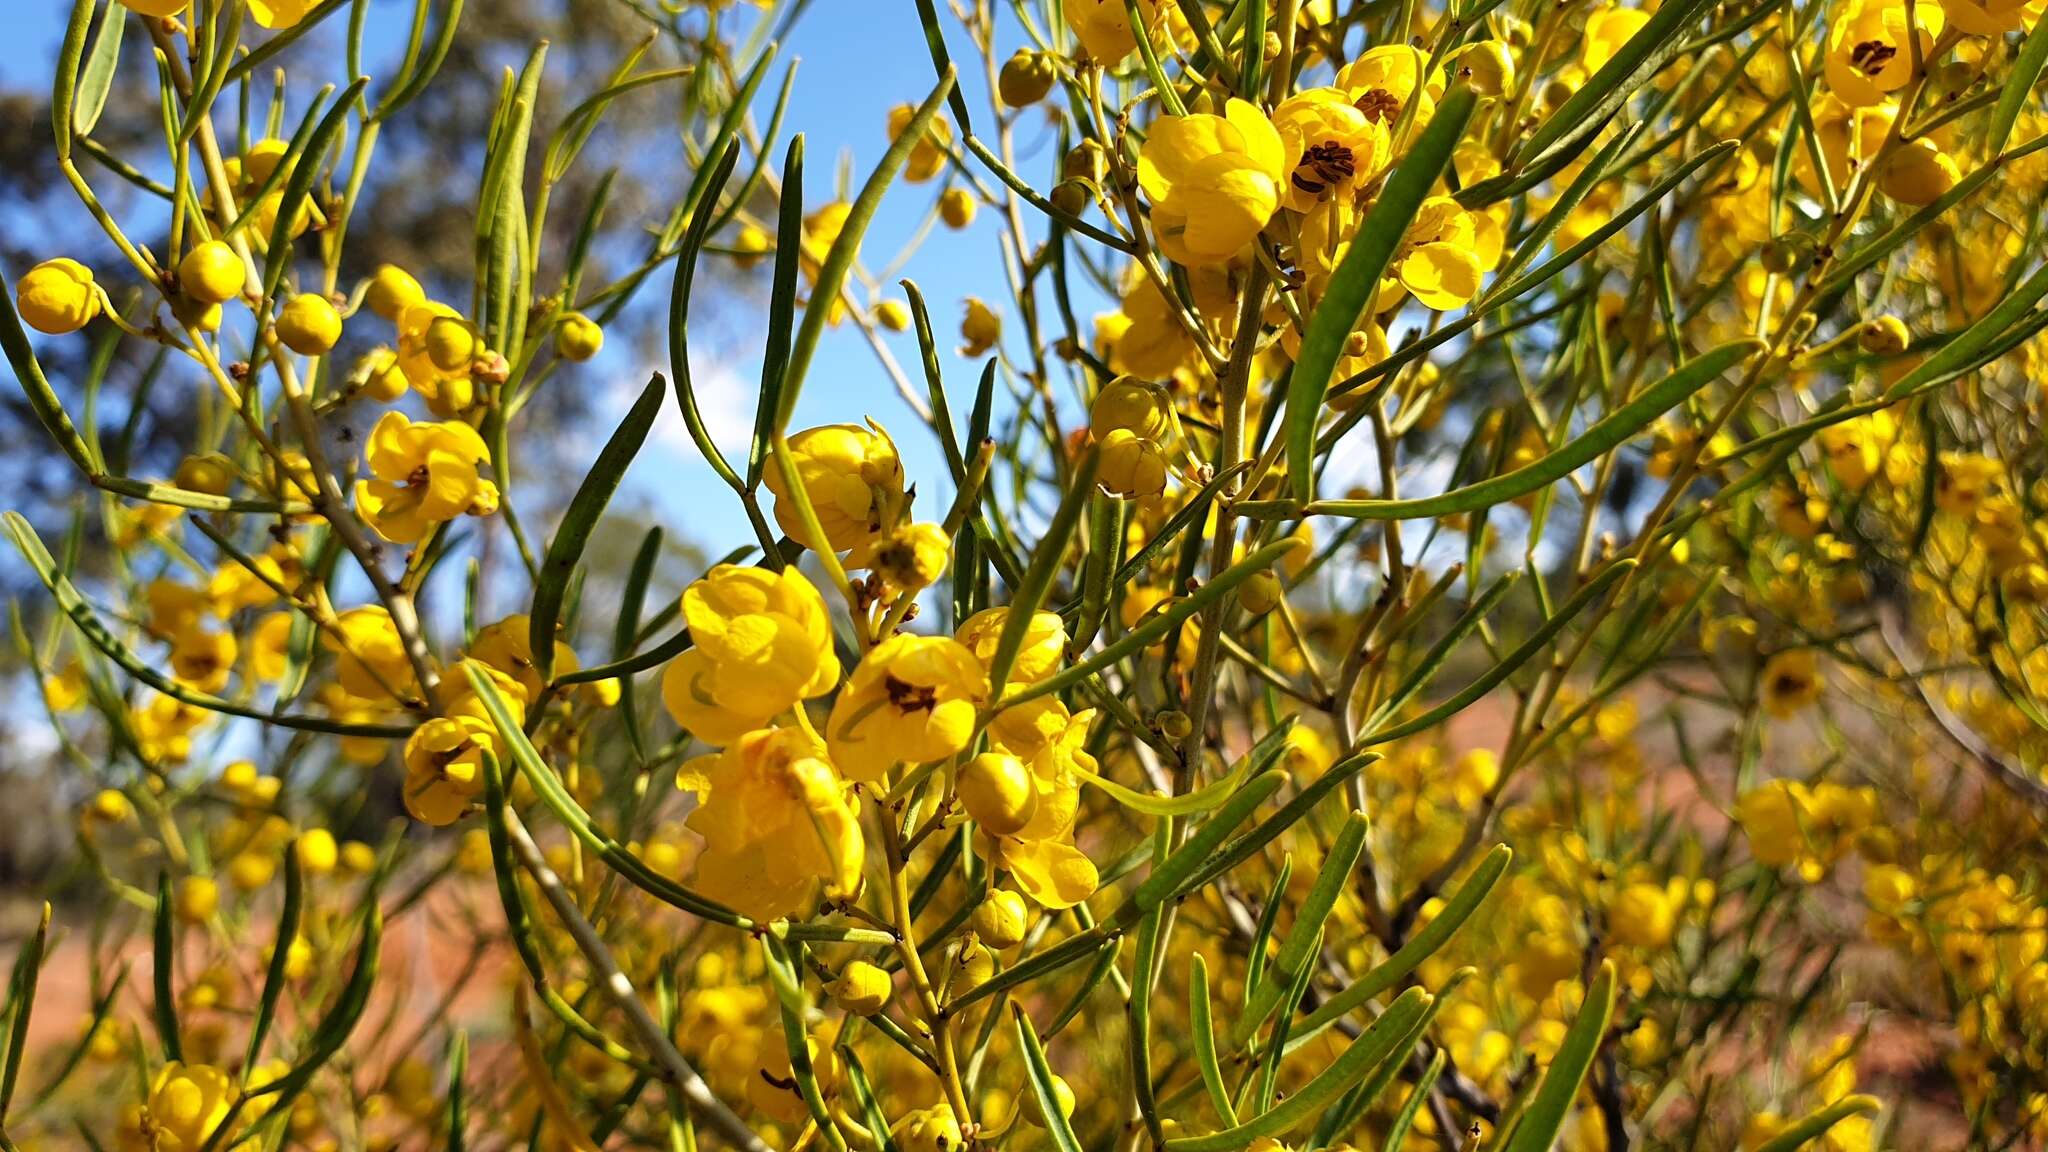 Image of Senna artemisioides subsp. zygophylla